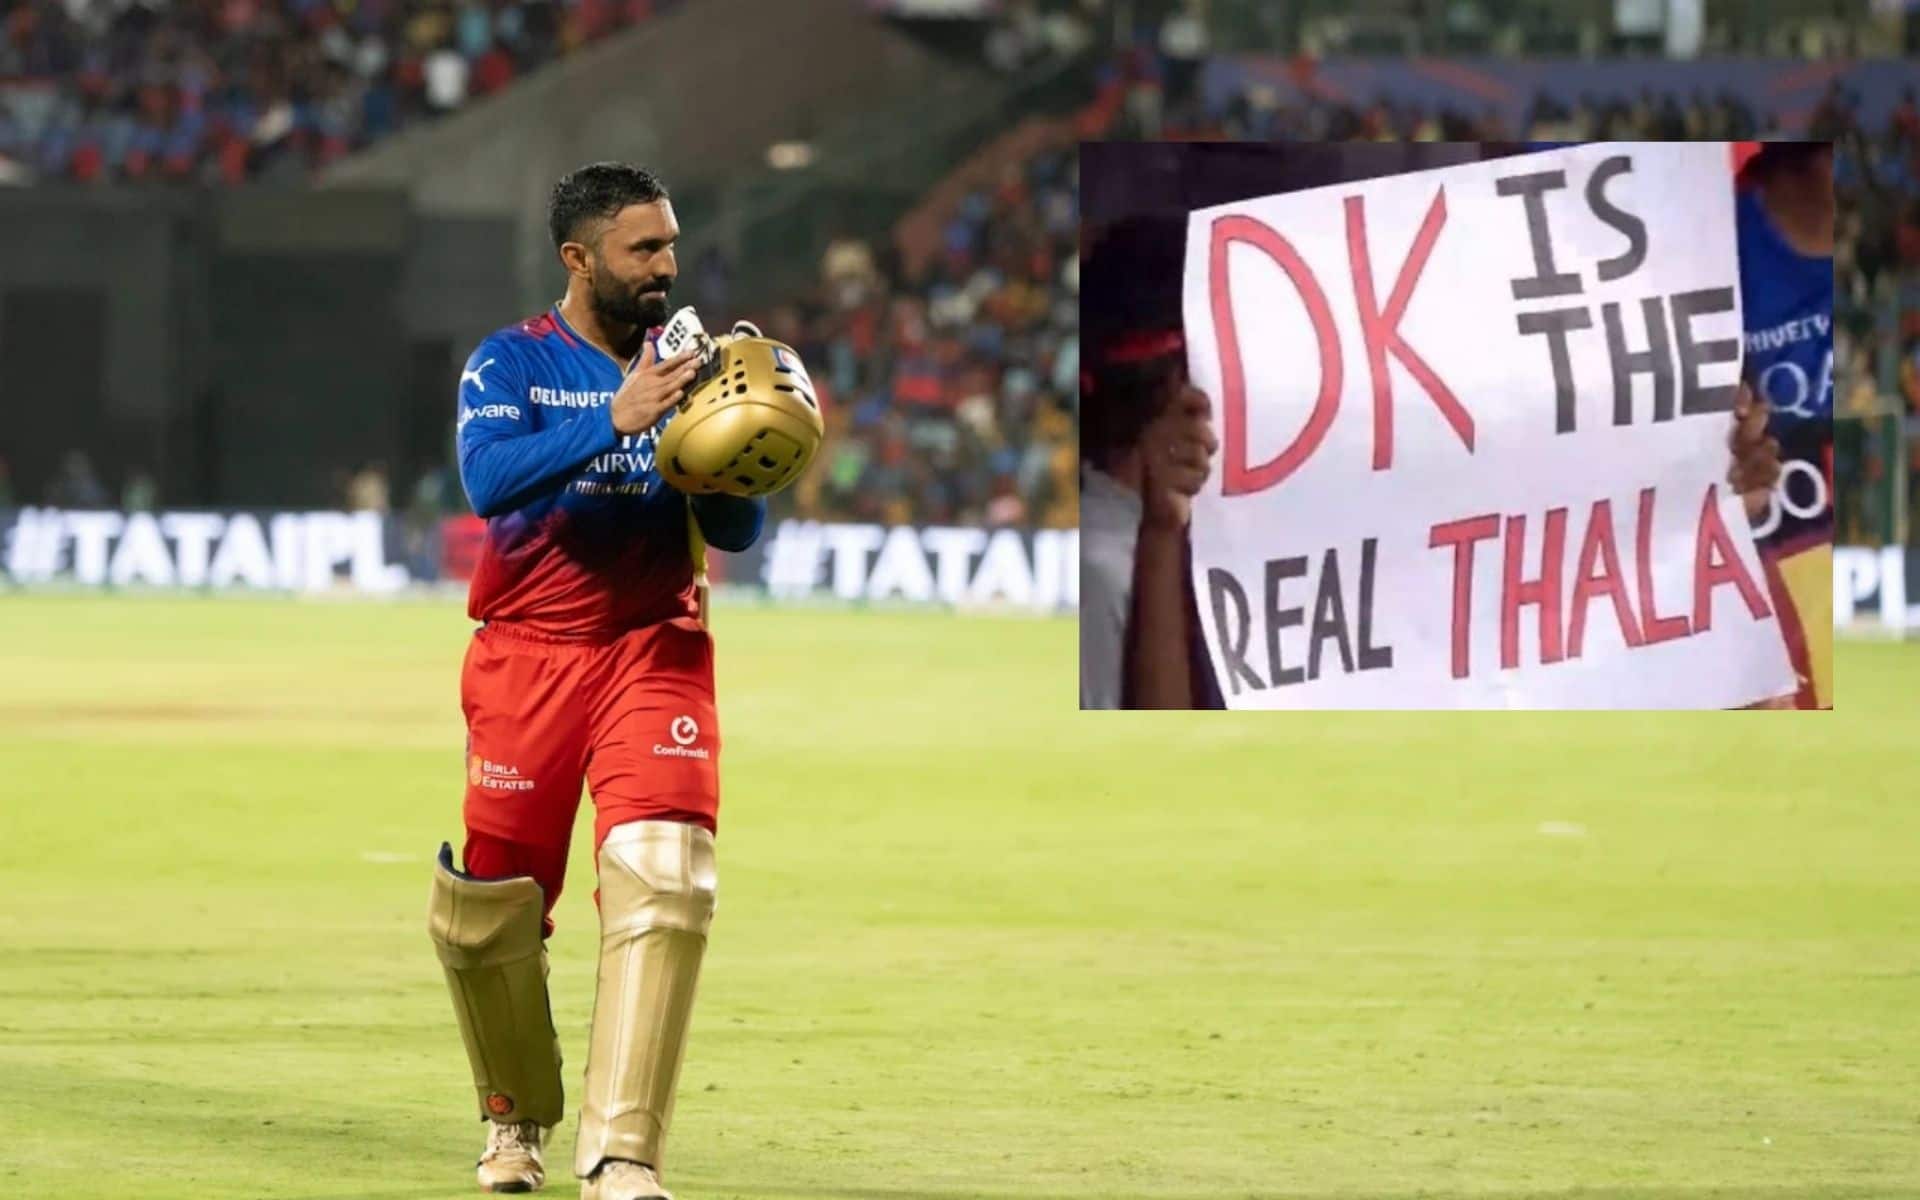 'DK, Real Thala' - Fan Placard Trolling CSK, MS Dhoni Goes Viral In RCB Vs KKR